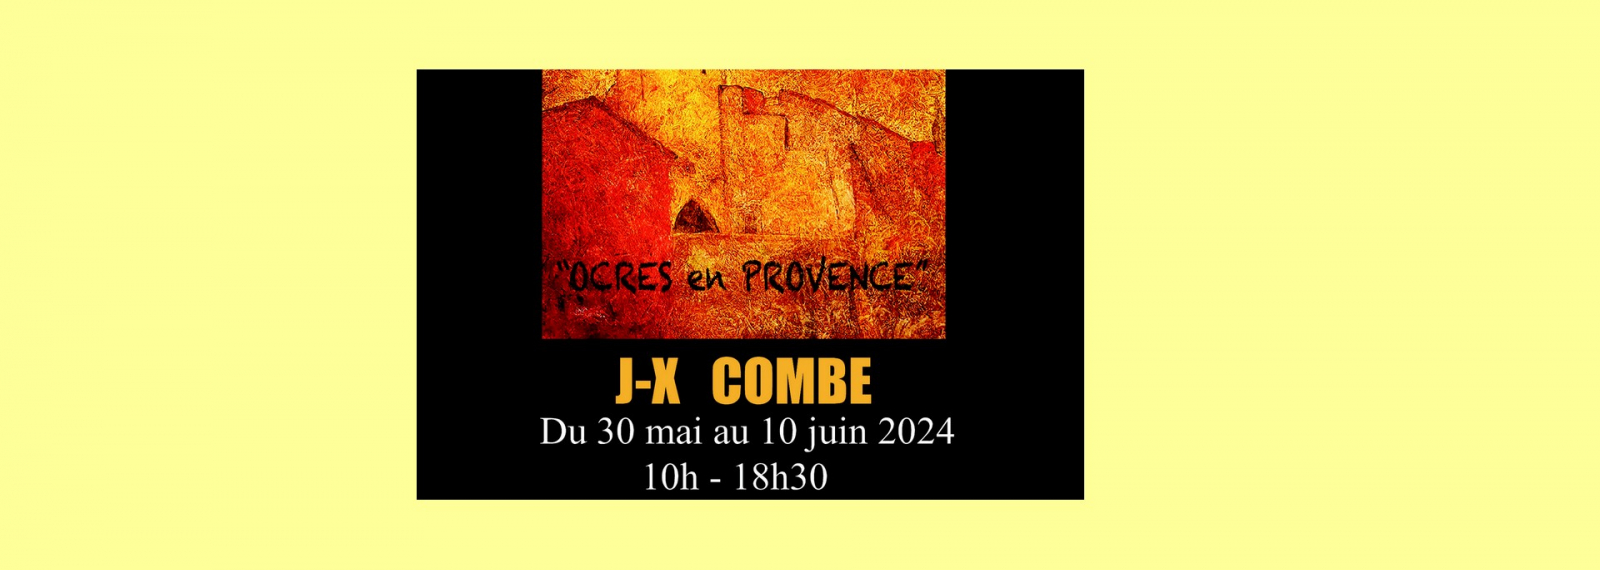 Exposition J-X Combe Ocres en Provence Maison des Consuls Eygalières